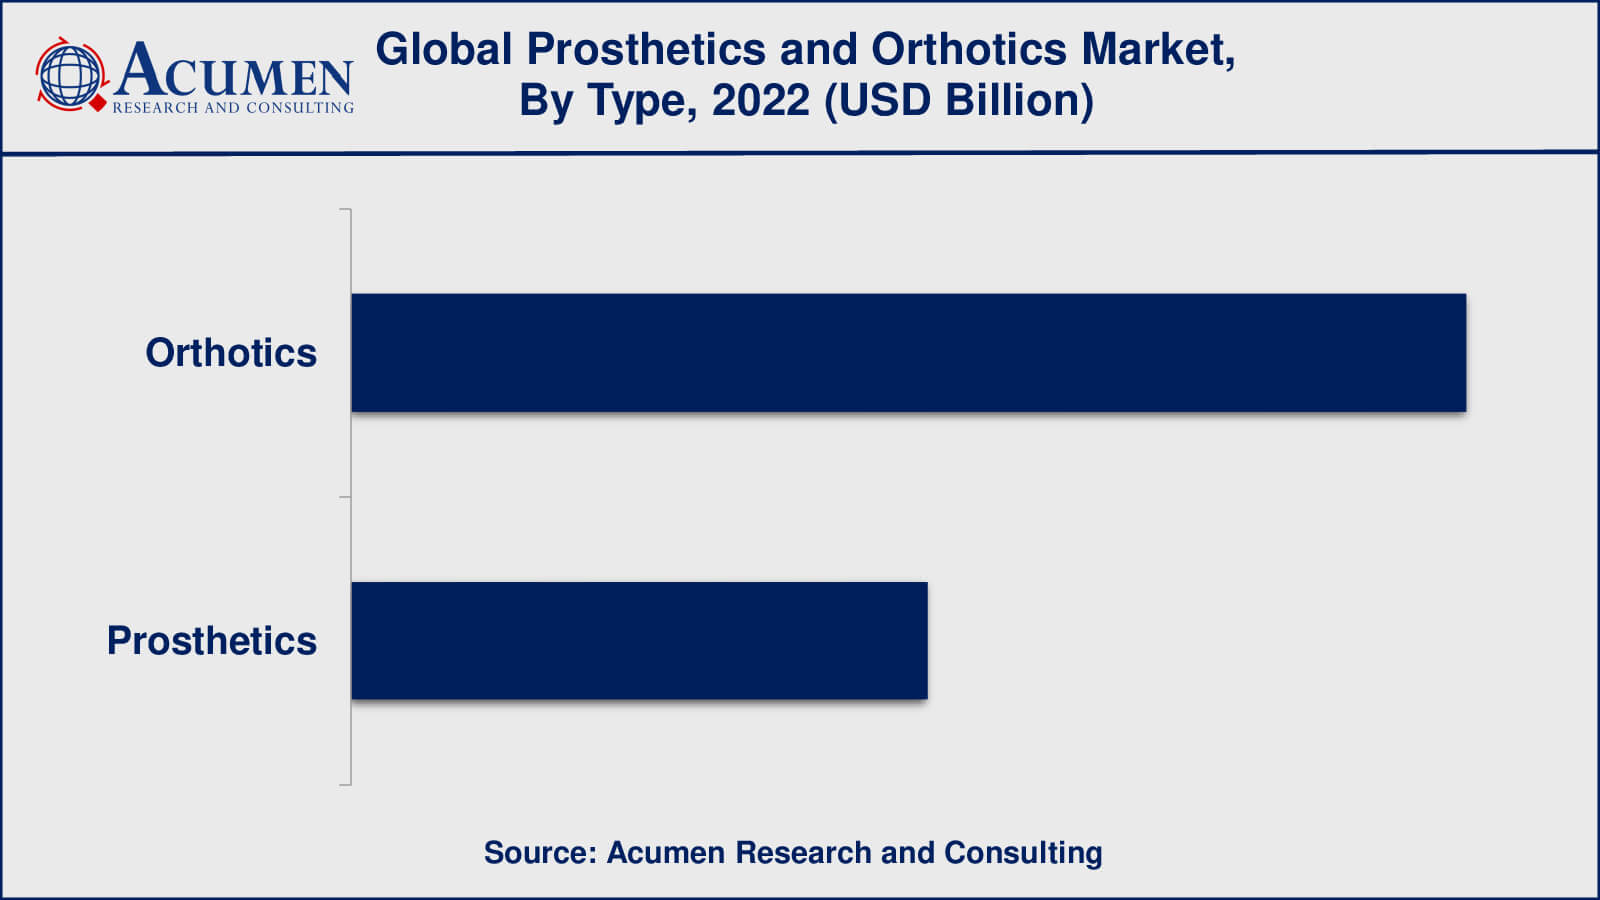 Prosthetics and Orthotics Market Drivers